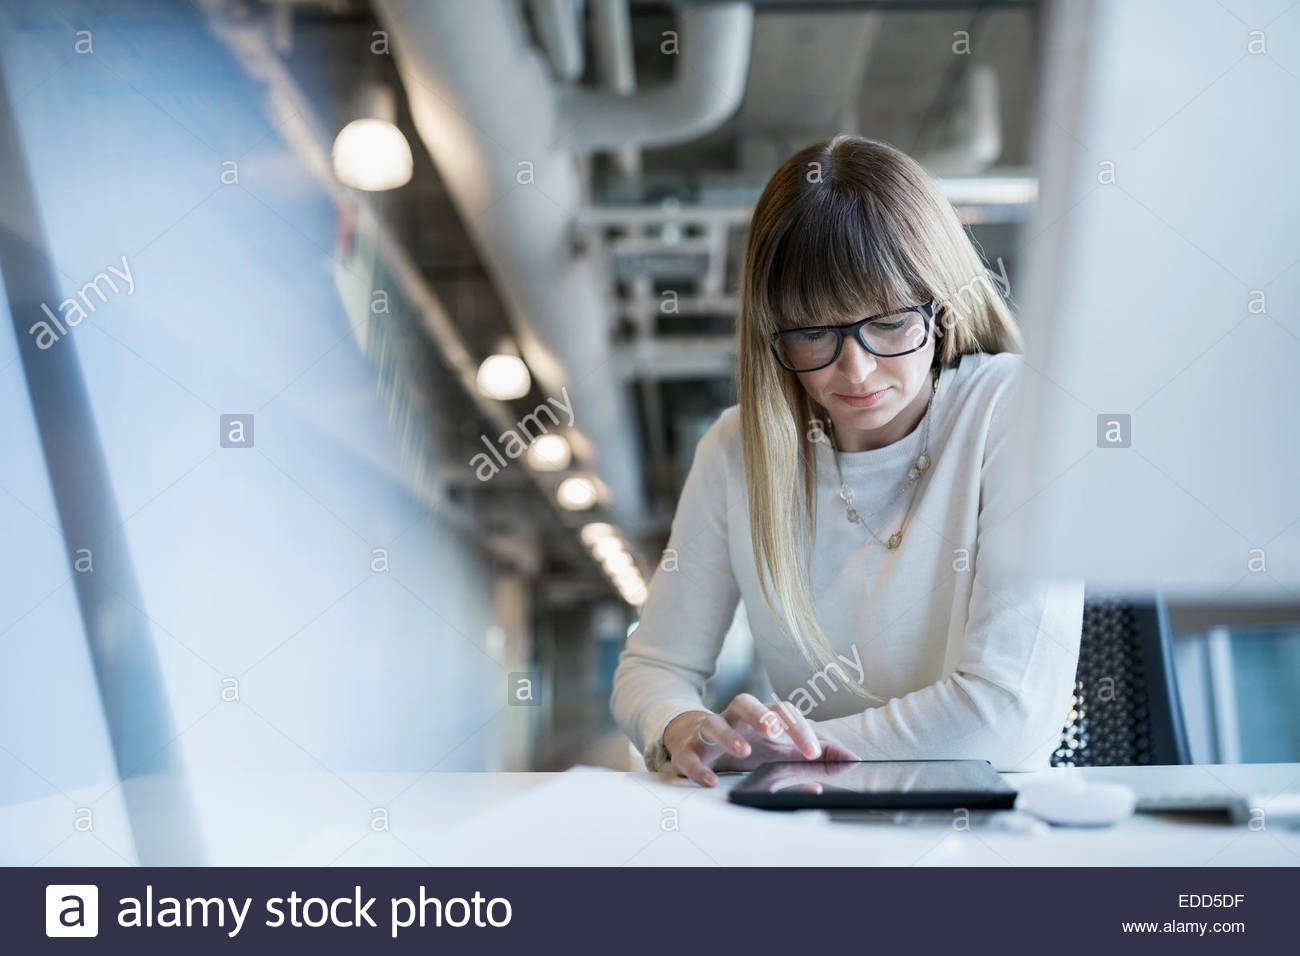 Businesswoman using digital tablet at office desk Banque D'Images